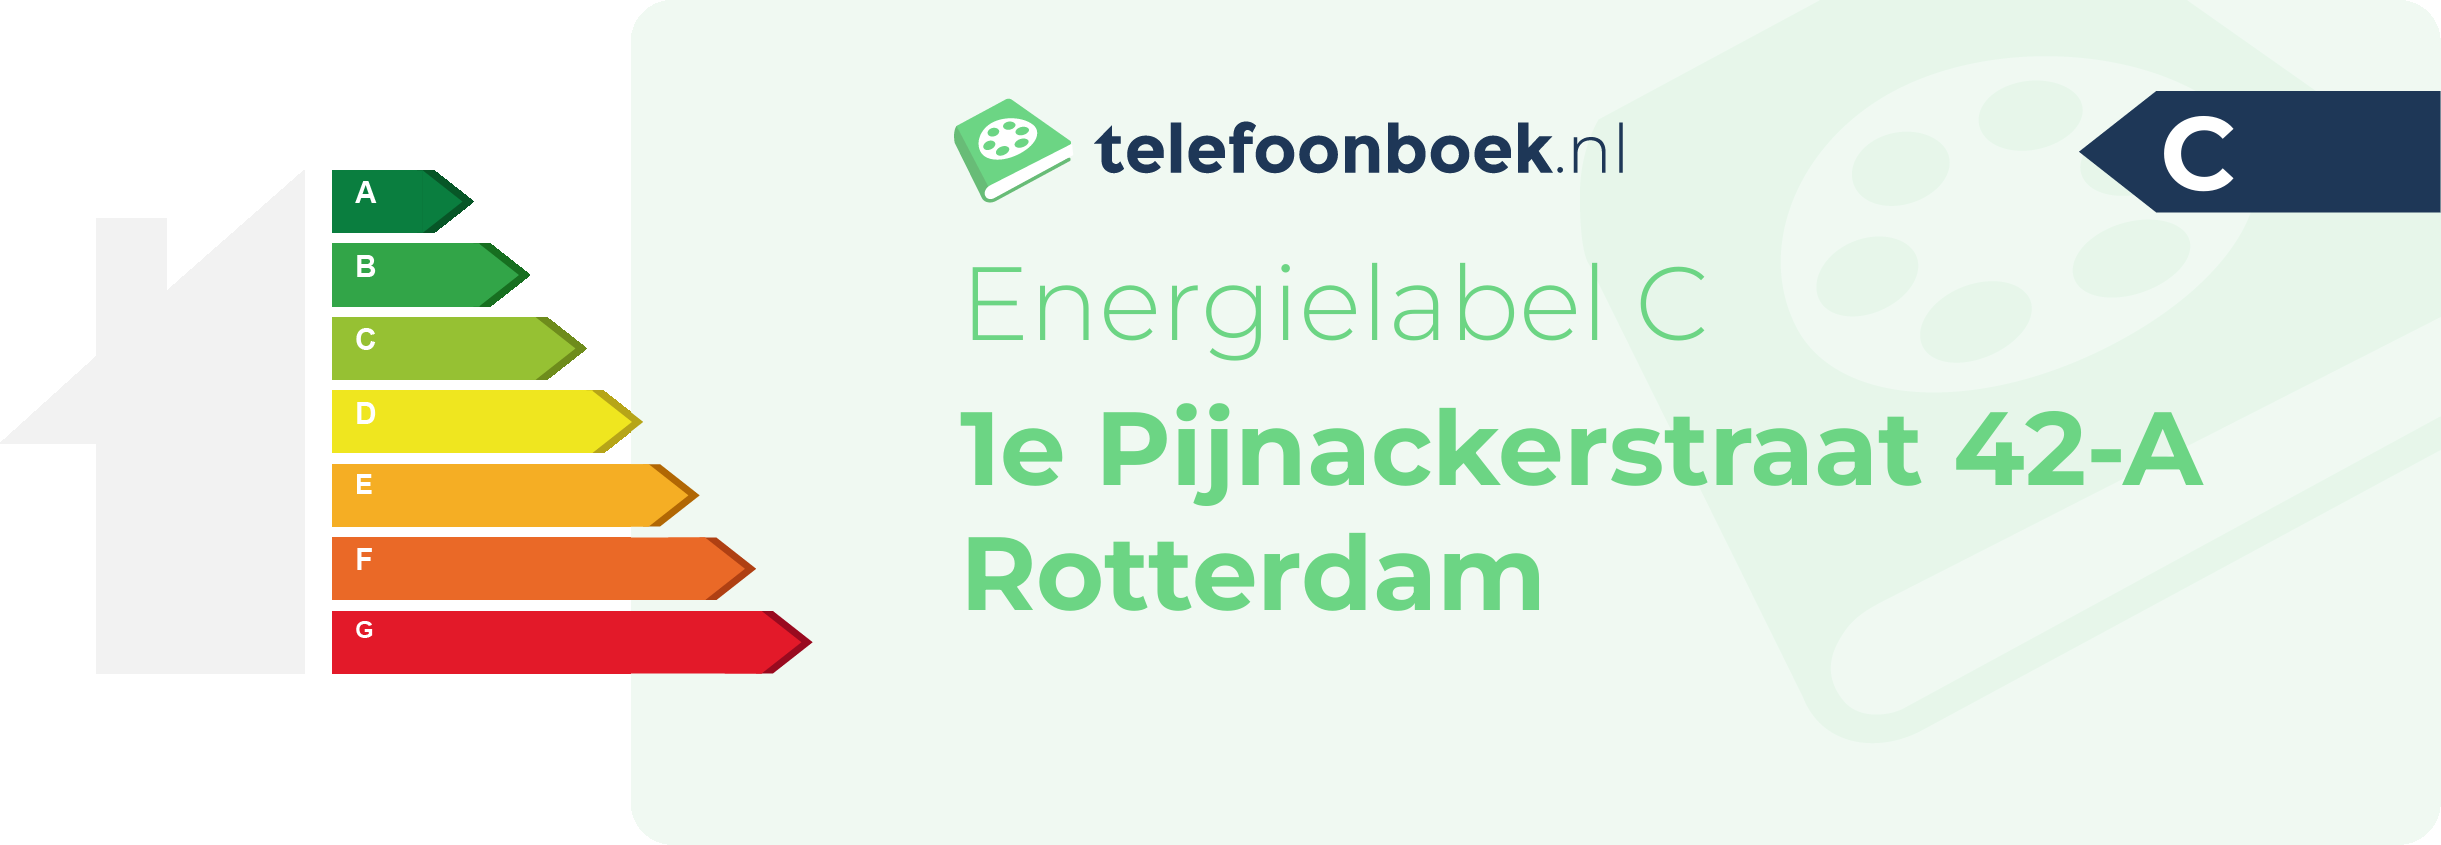 Energielabel 1e Pijnackerstraat 42-A Rotterdam